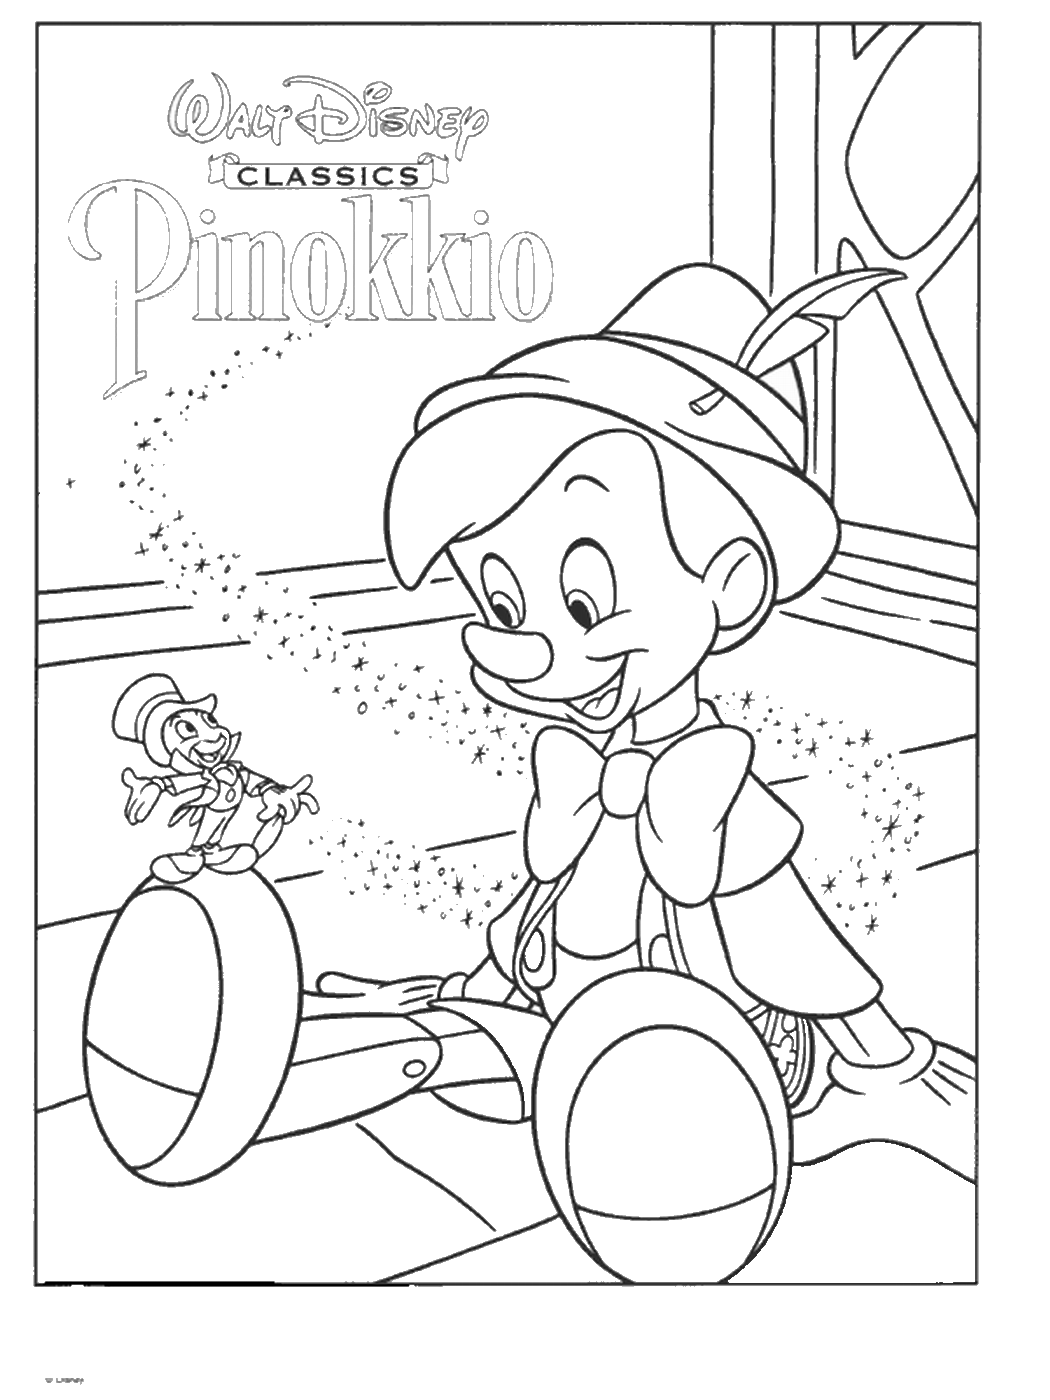 Pinocchio Printables